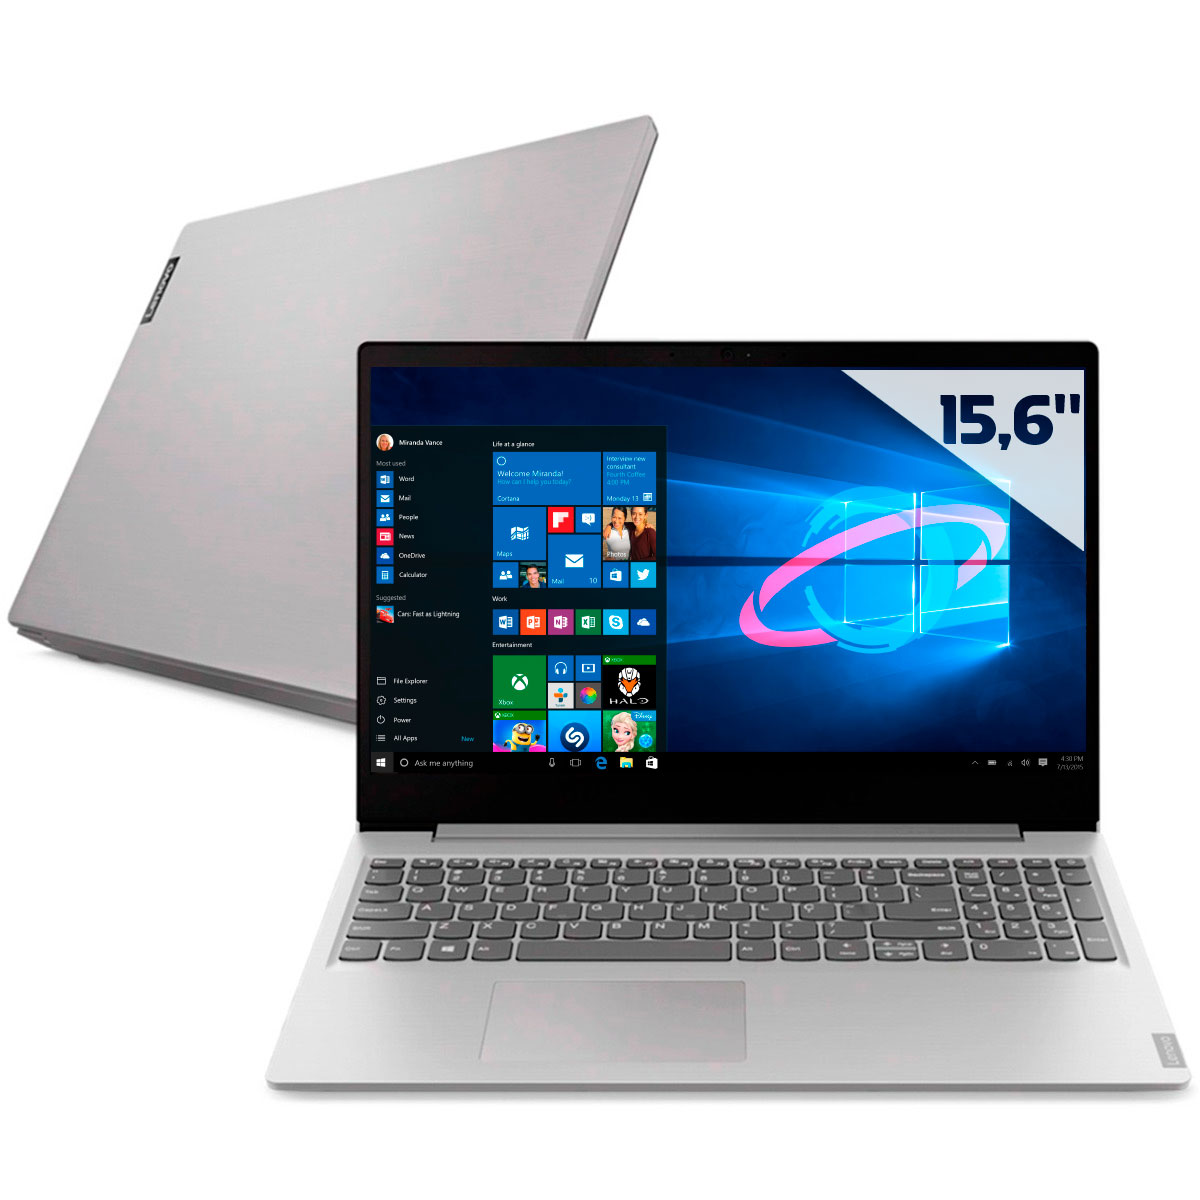 Notebook Lenovo Ideapad S145 - Intel i5 1035G1, 8GB, HD 1TB, Tela 15.6